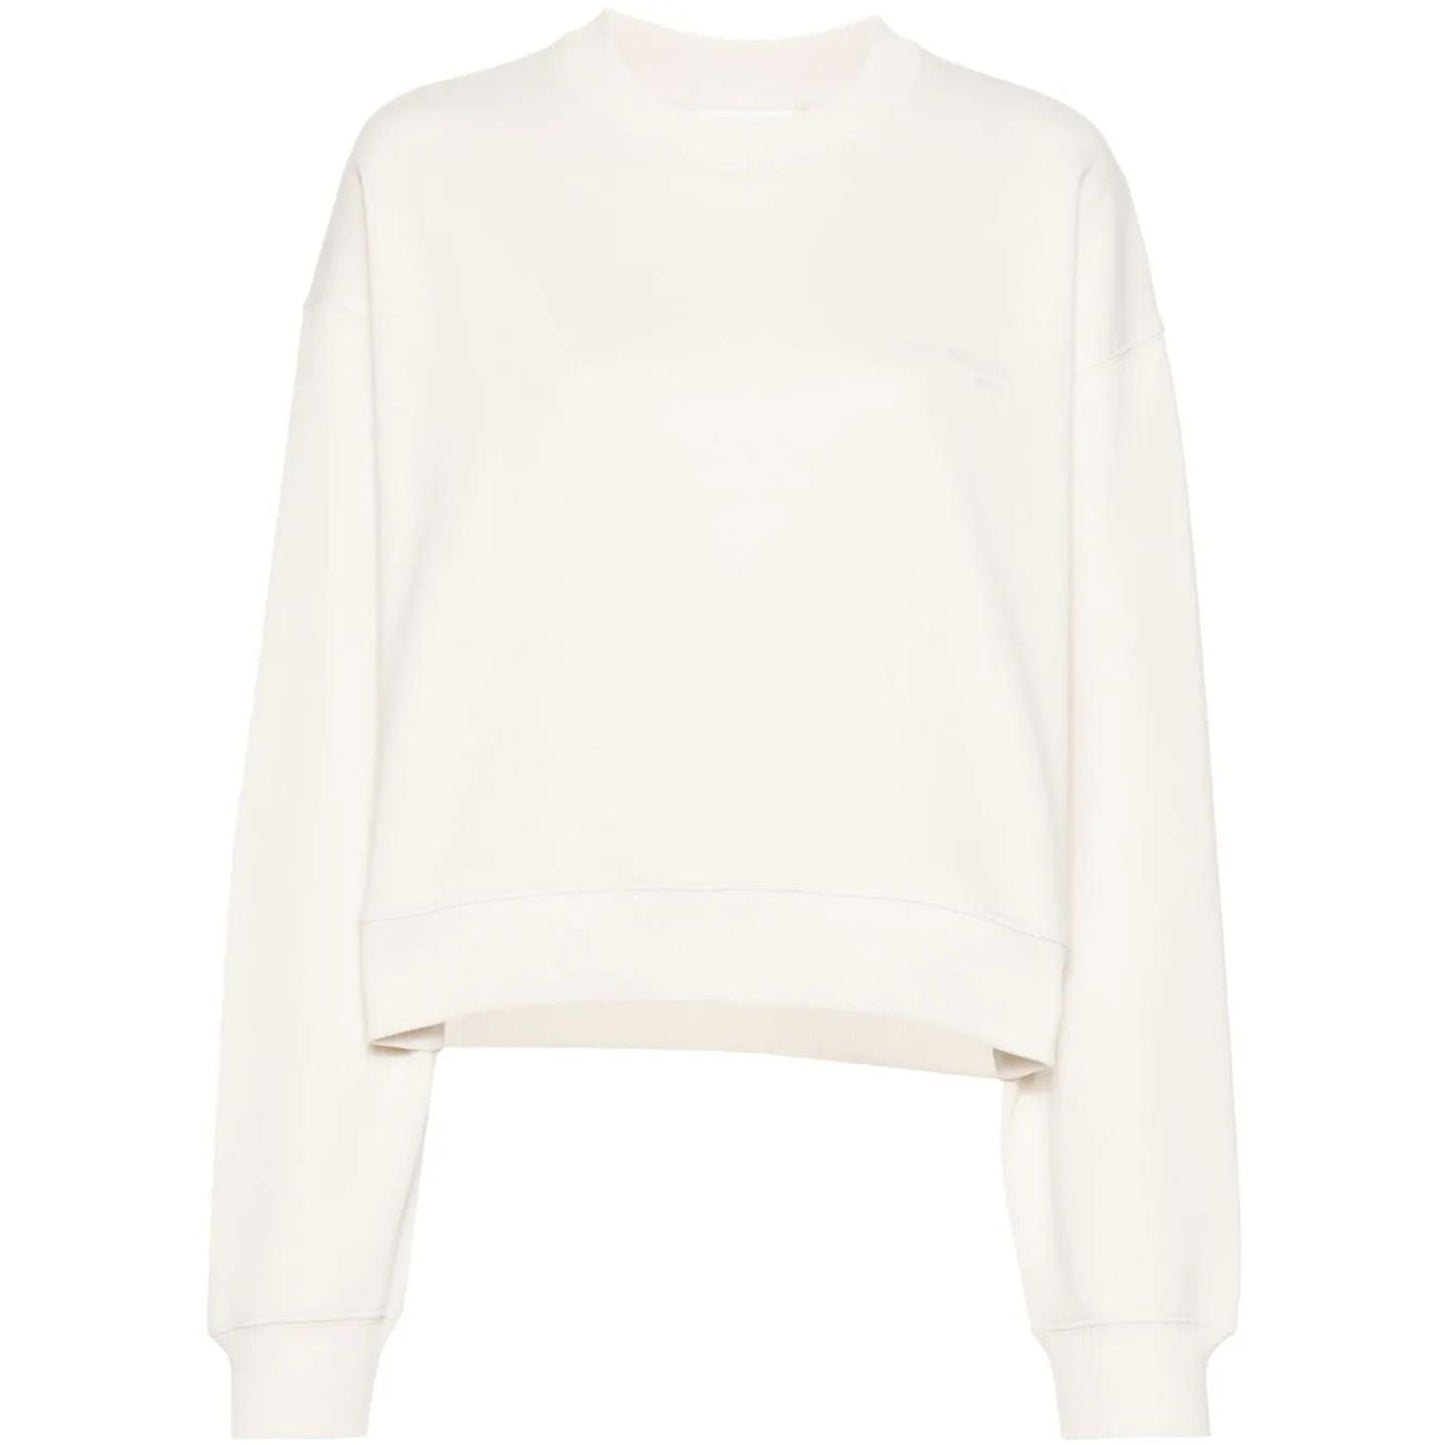 AXEL ARIGATO džemperis moterims, Balta, Legacy sweatshirt